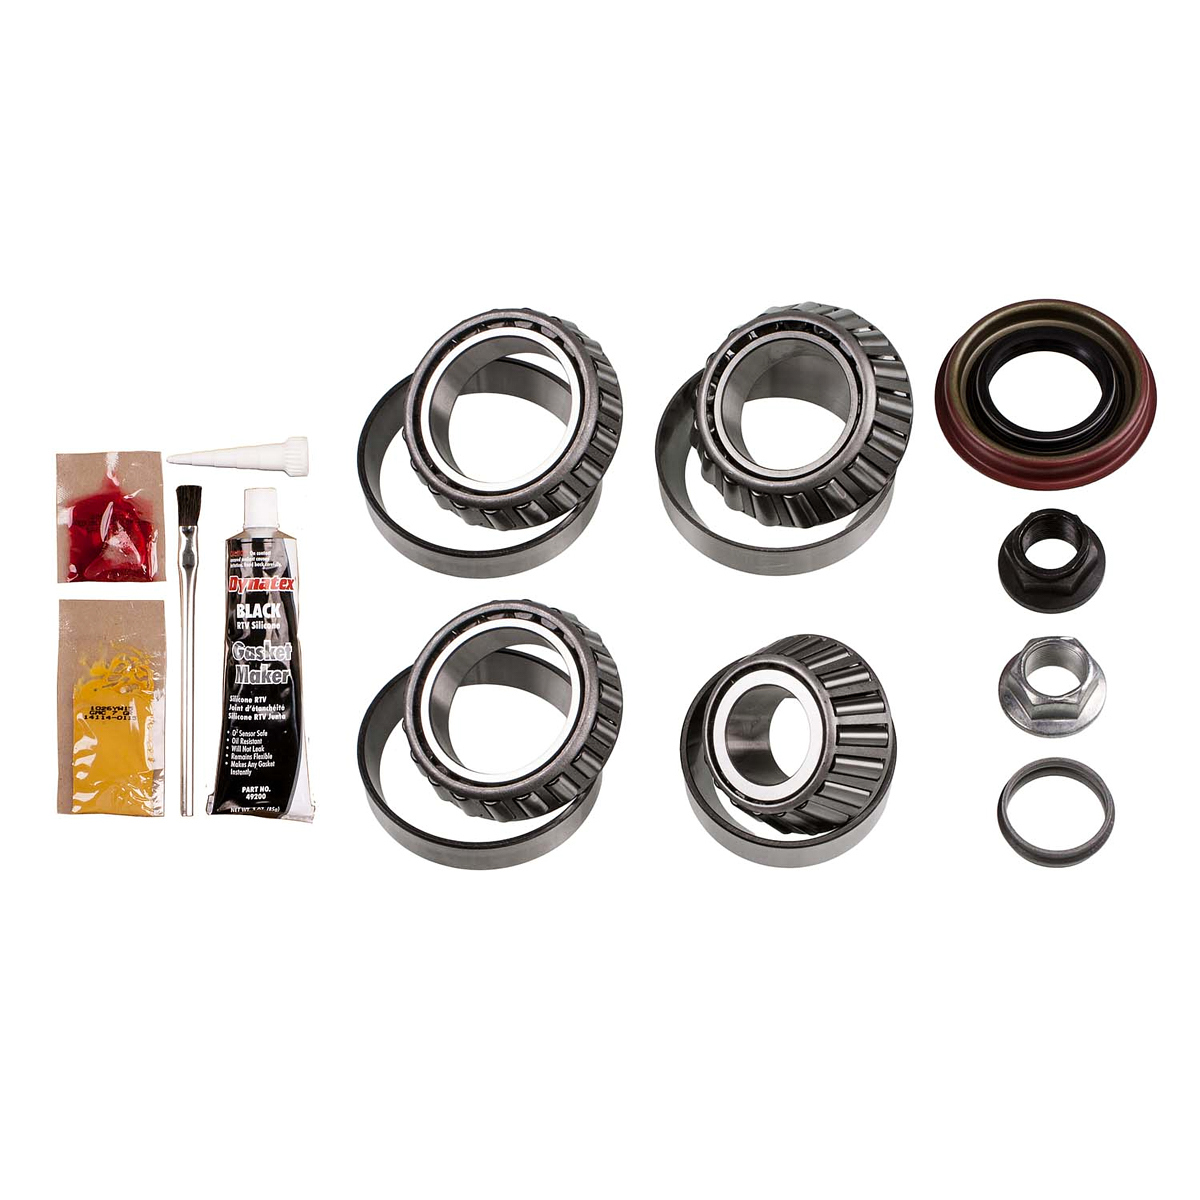 Motive Gear R9.75FRL Differential Bearing Kit, Bearings / Crush Sleeve / RTV / Seal / Pinion Nut / Thread Locker, Ford 9.75 in, Kit